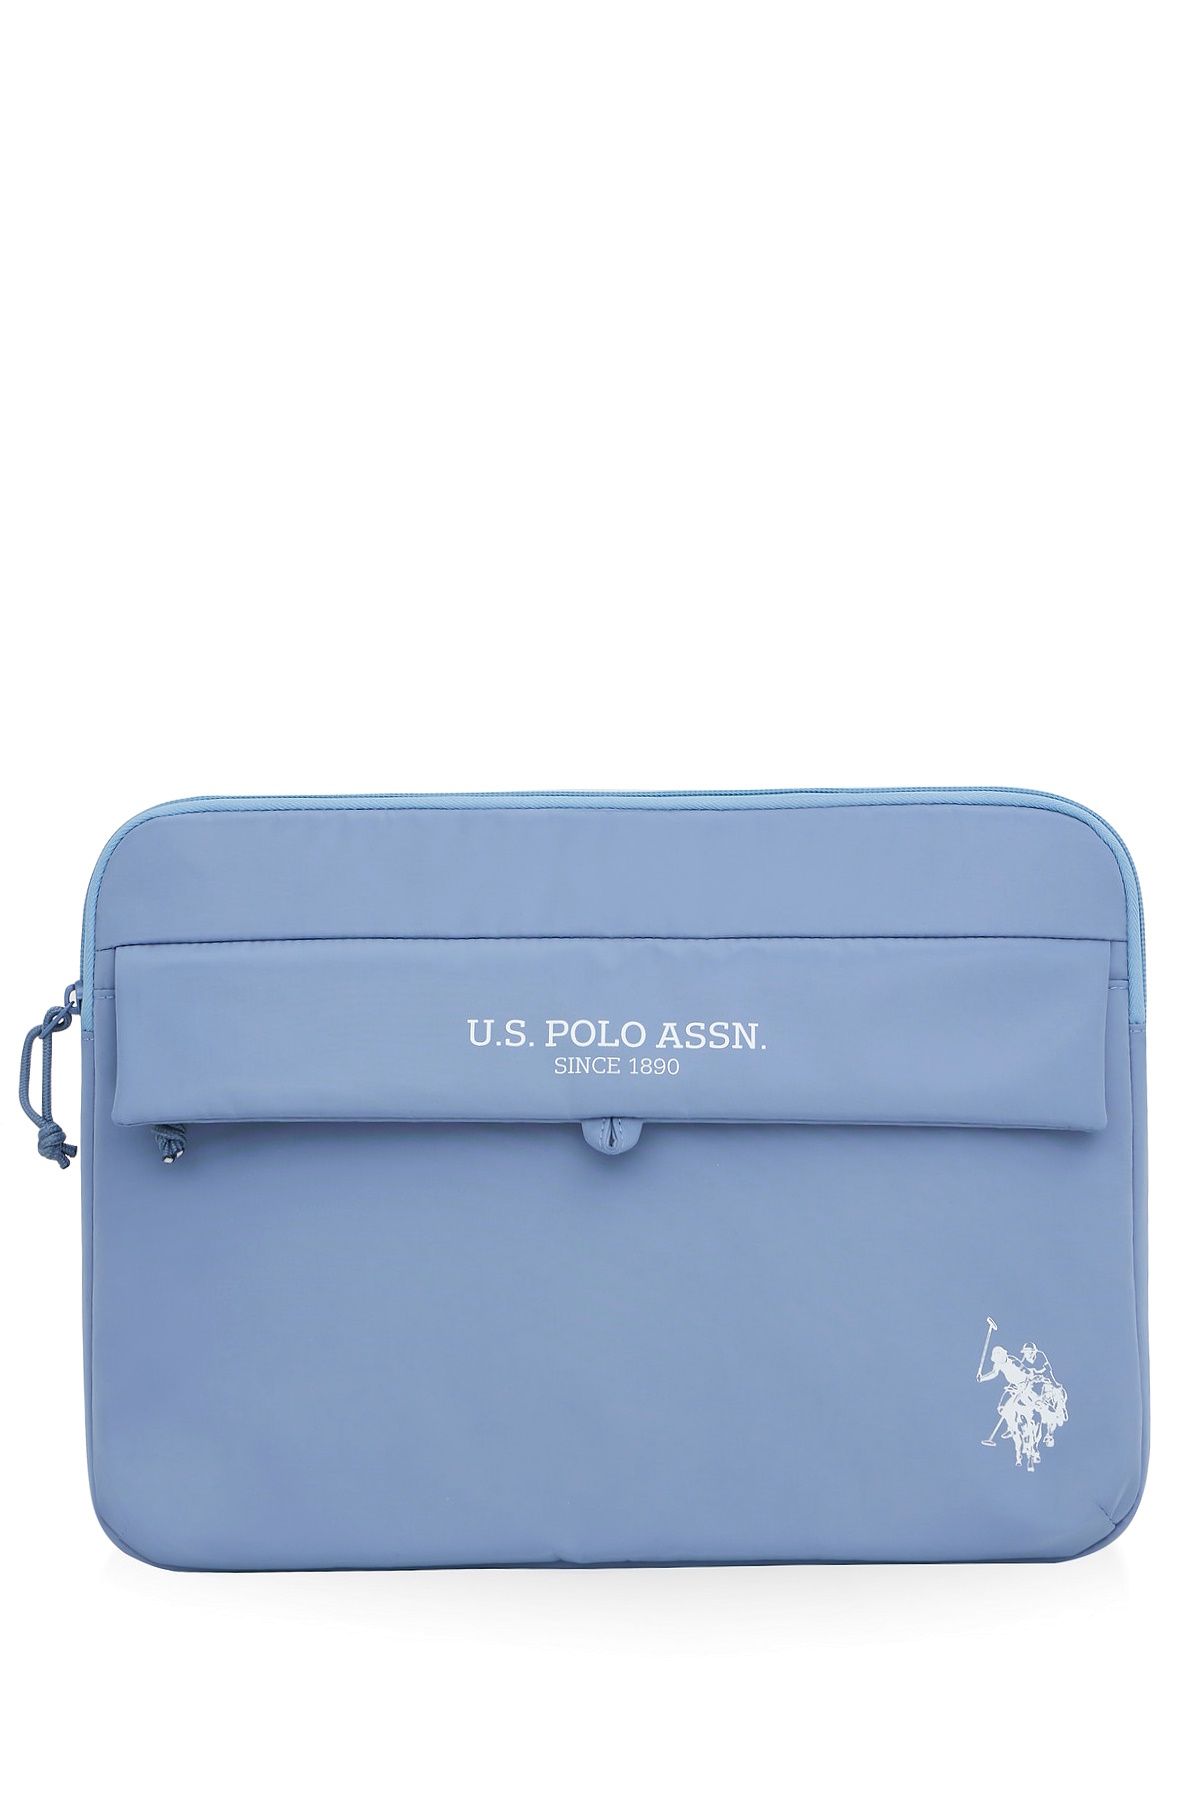 U.S. Polo Assn. U.s. Polo Assn. Macbook Air - Macbook Pro 13&13.3 İnç Uyumlu Laptop Kılıfı Mavi PLEVR23683